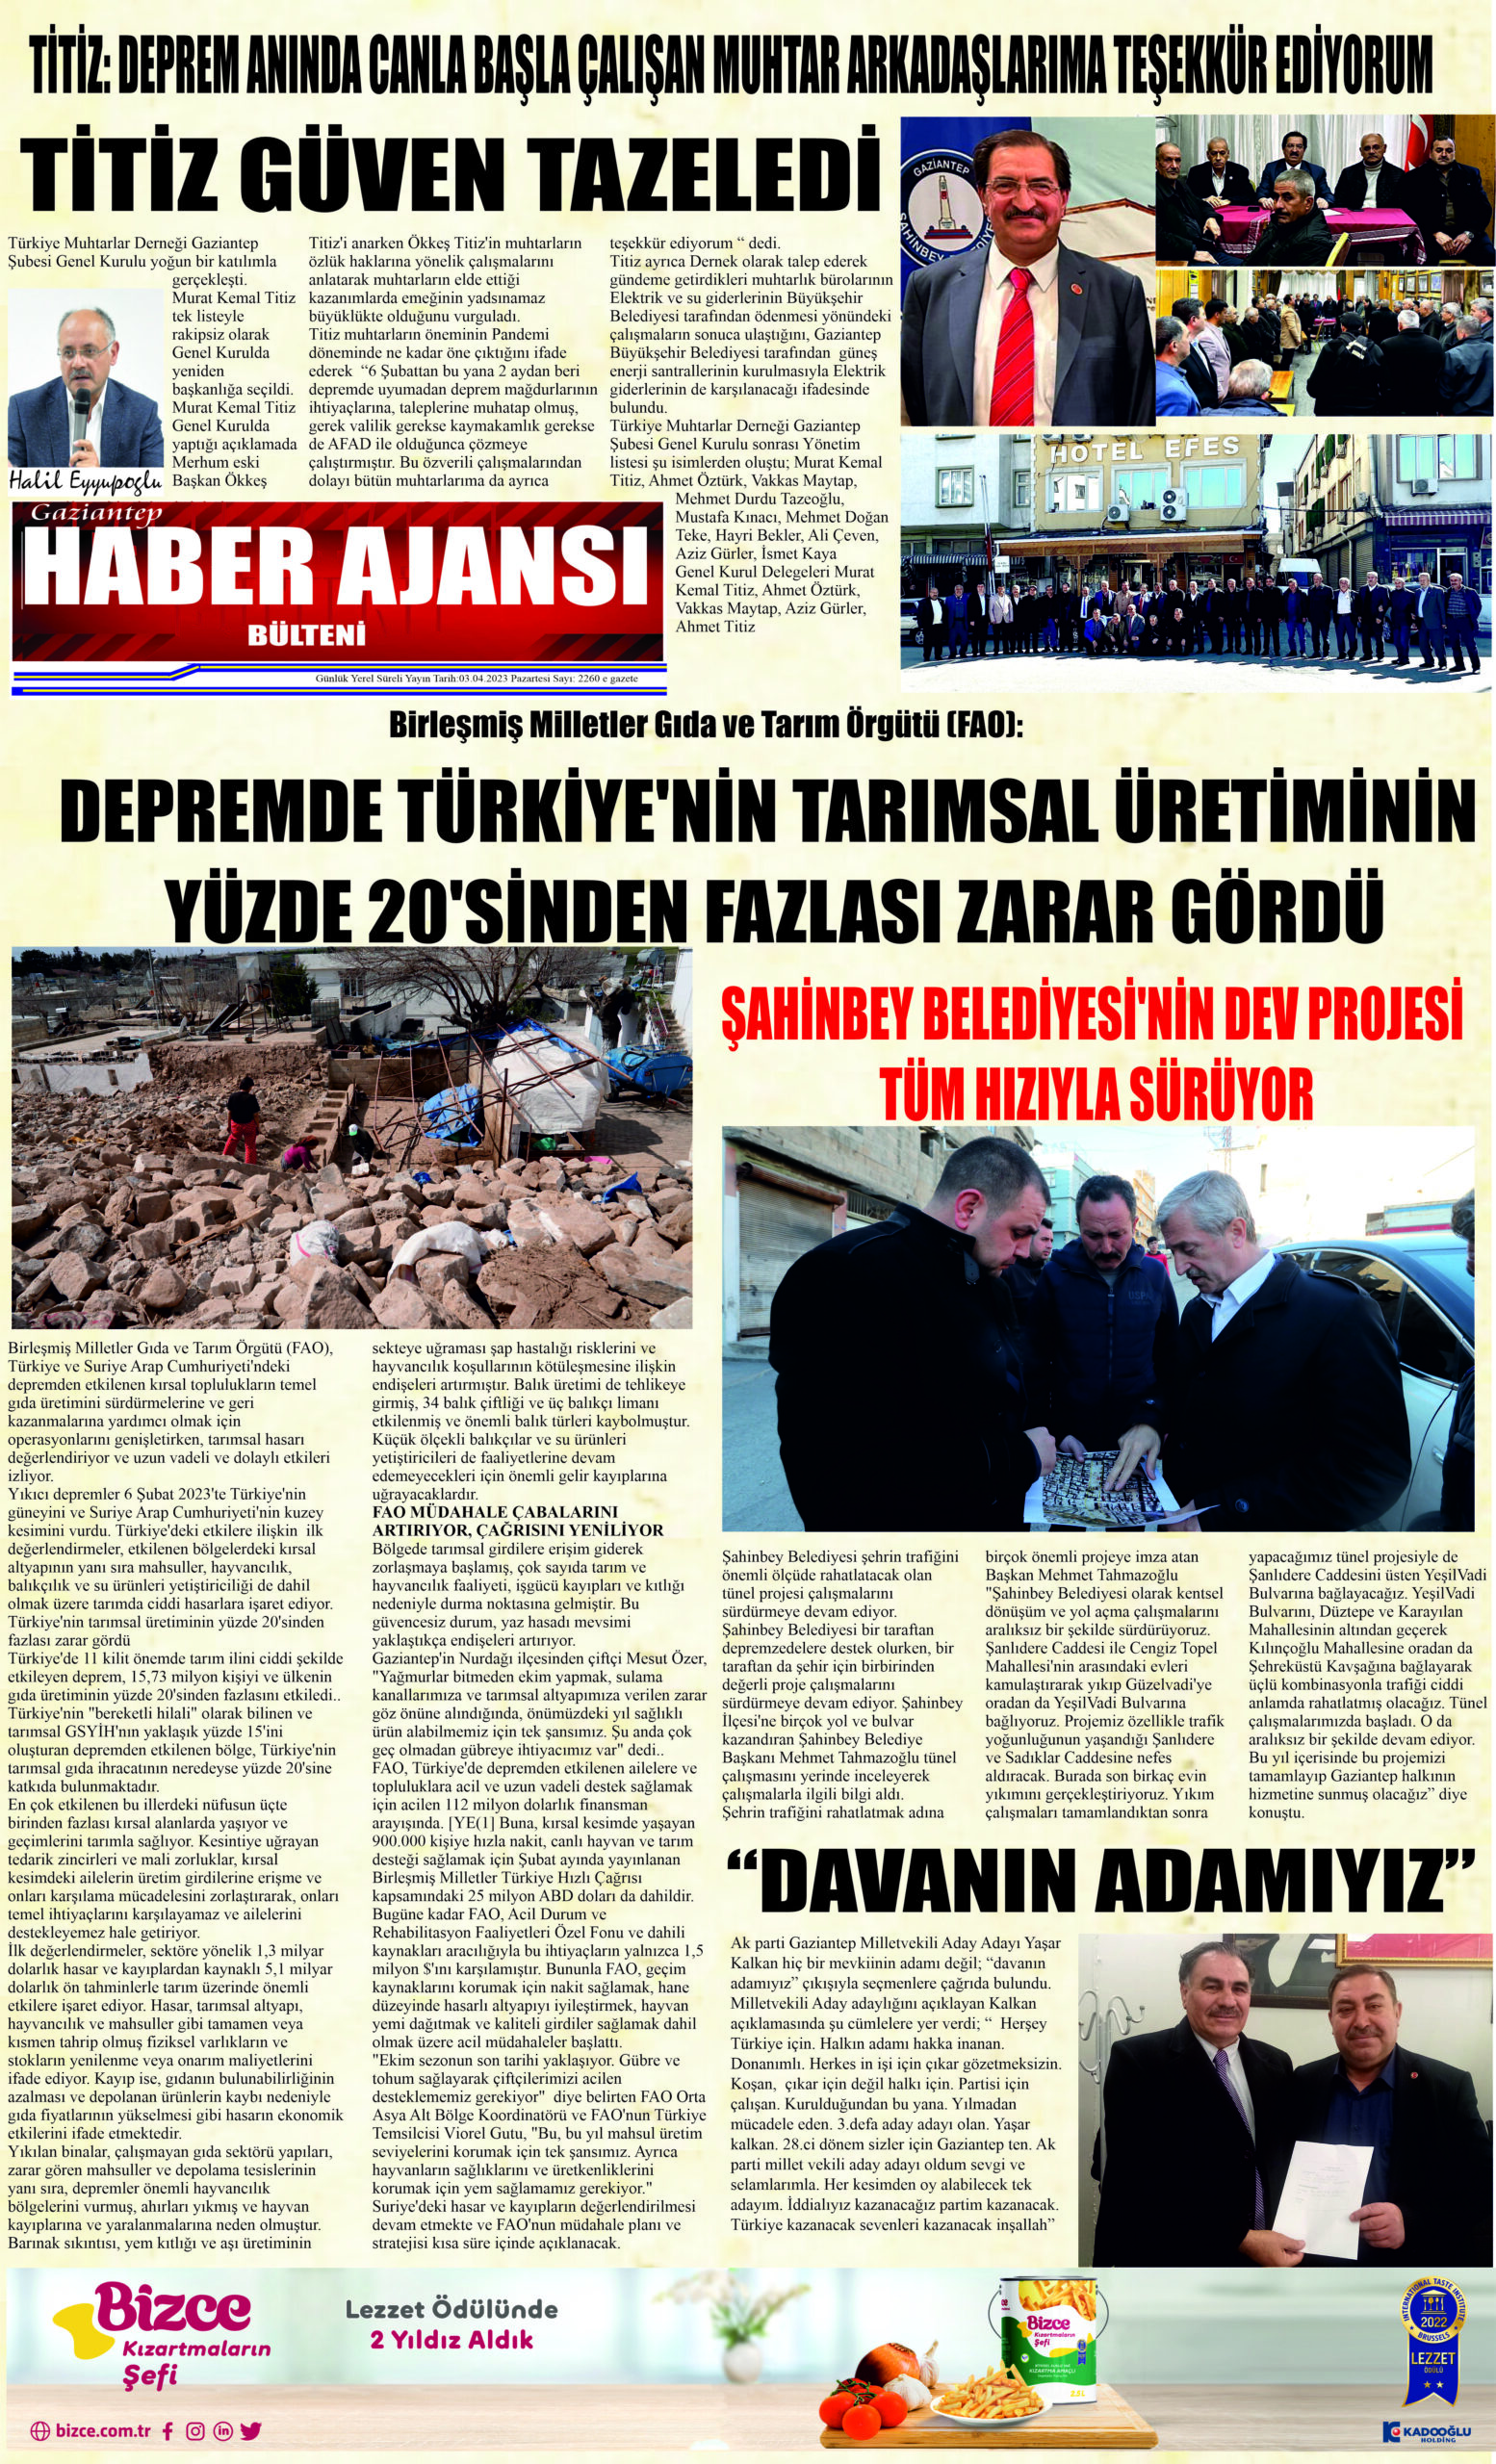 Gaziantep Haber Ajansı Bülteni Cuma 03.04.2023 e gazete